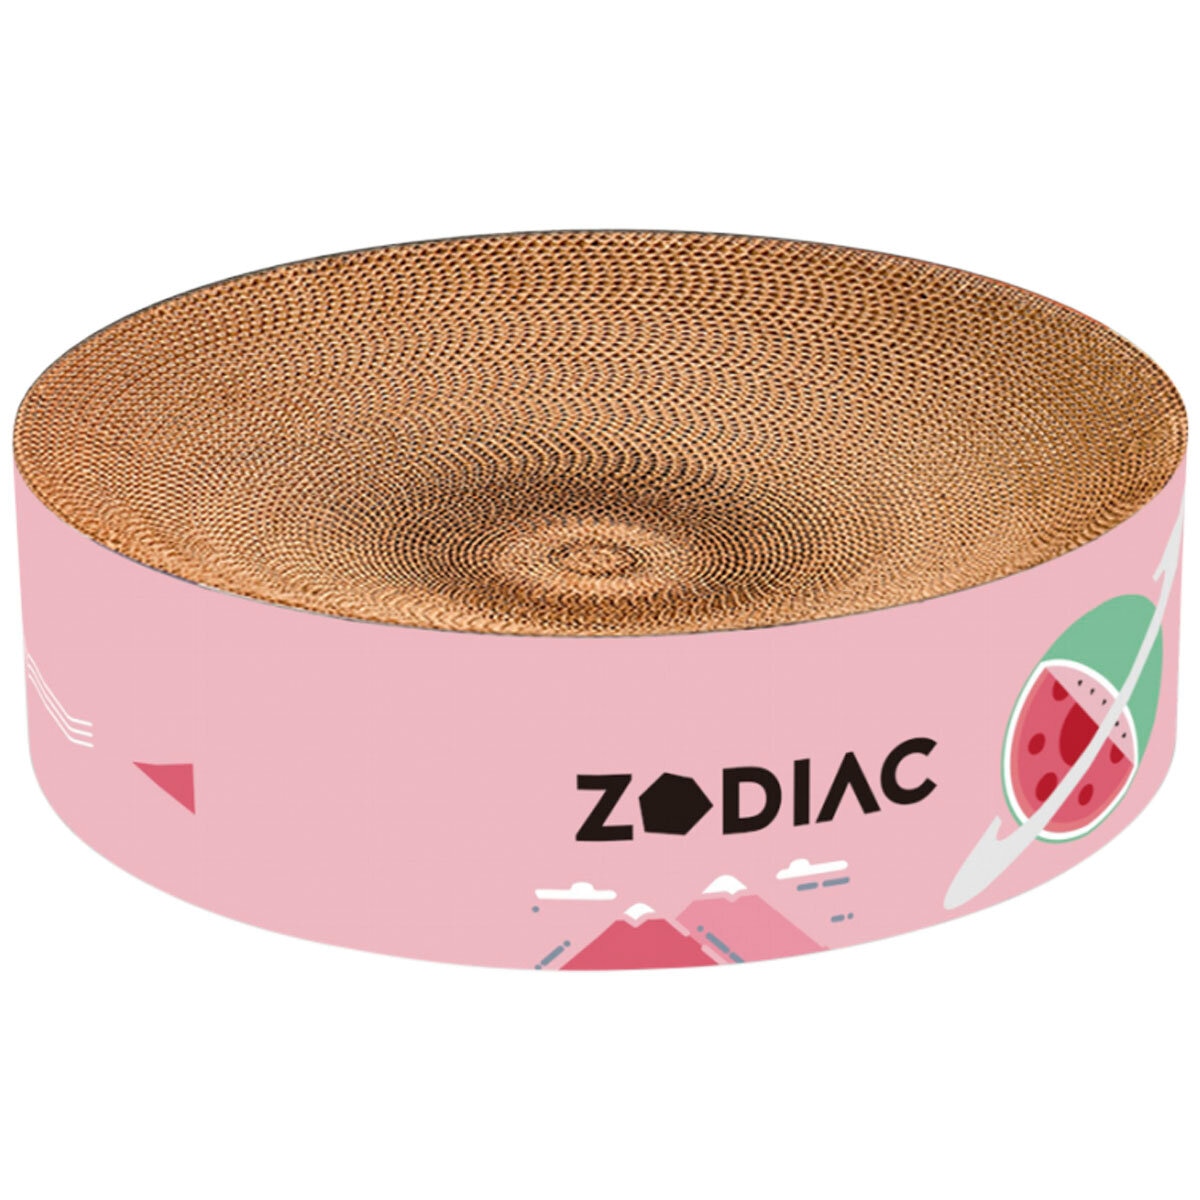 Zodiac Round Cat Scratcher Watermelon